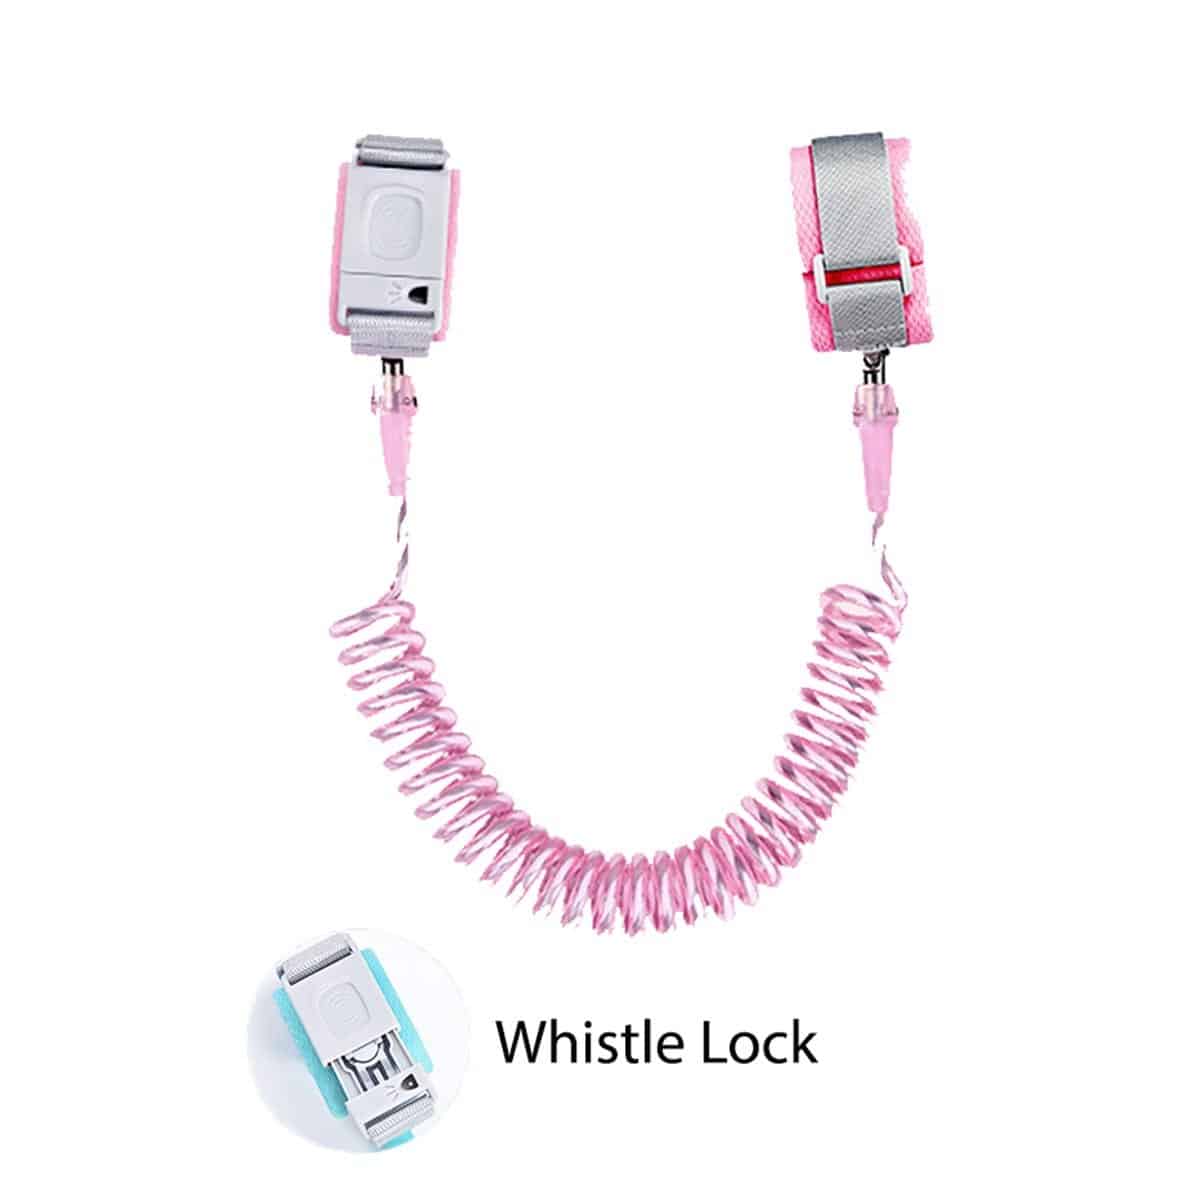 1.5m Anti Lost Rope Children Whistle Lock - Pink